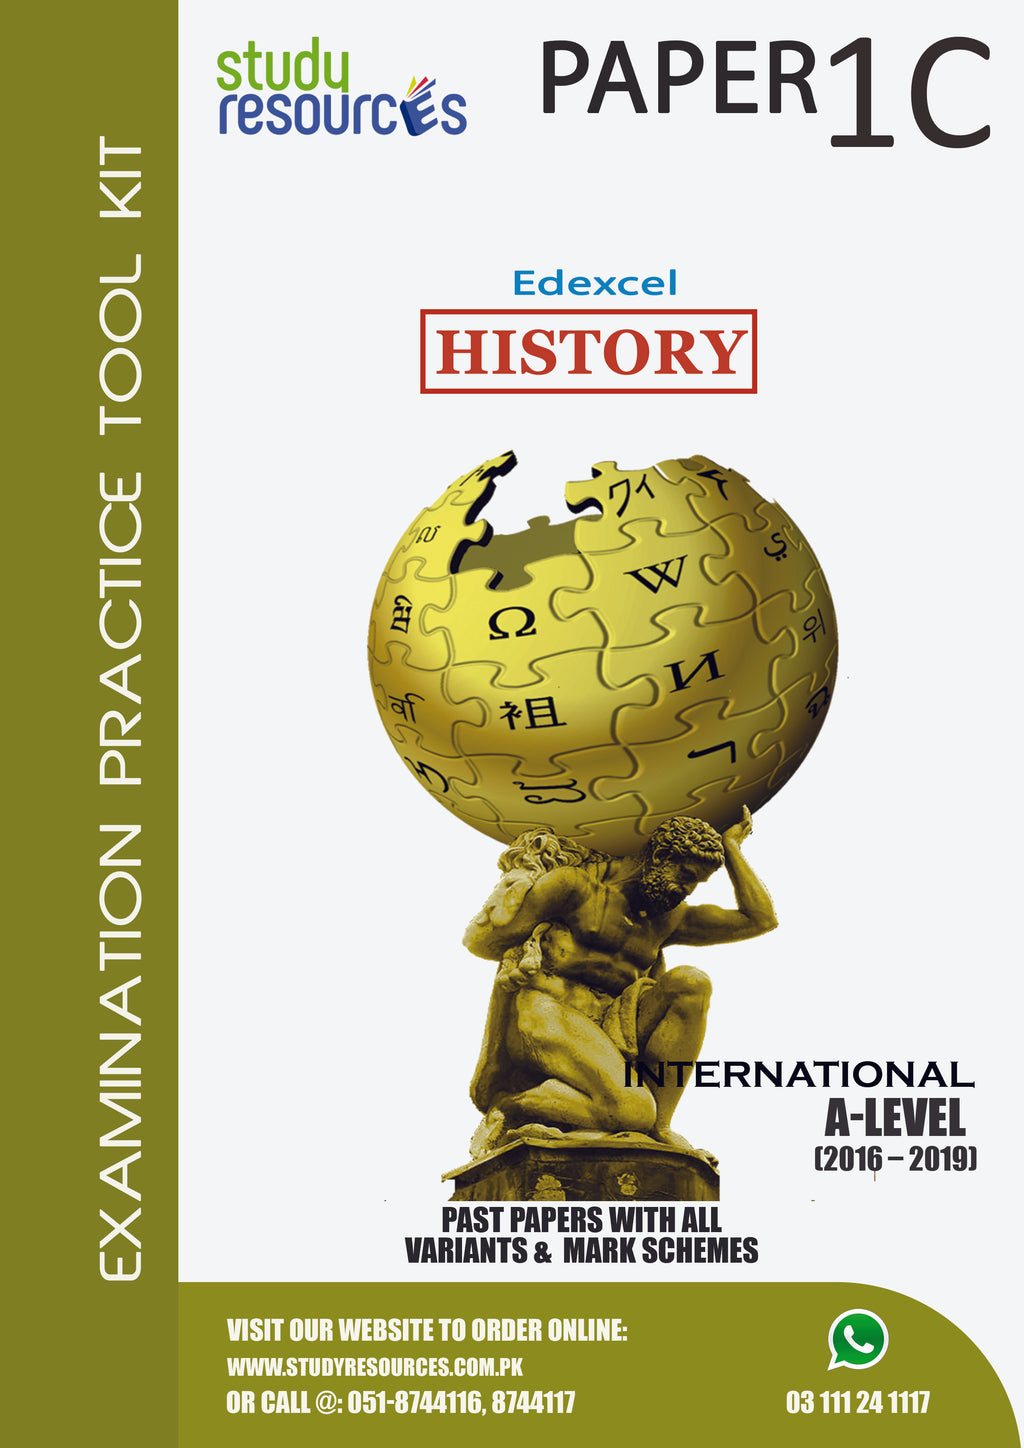 Edexcel A-Level History P-1C Past Papers (2016-2019)